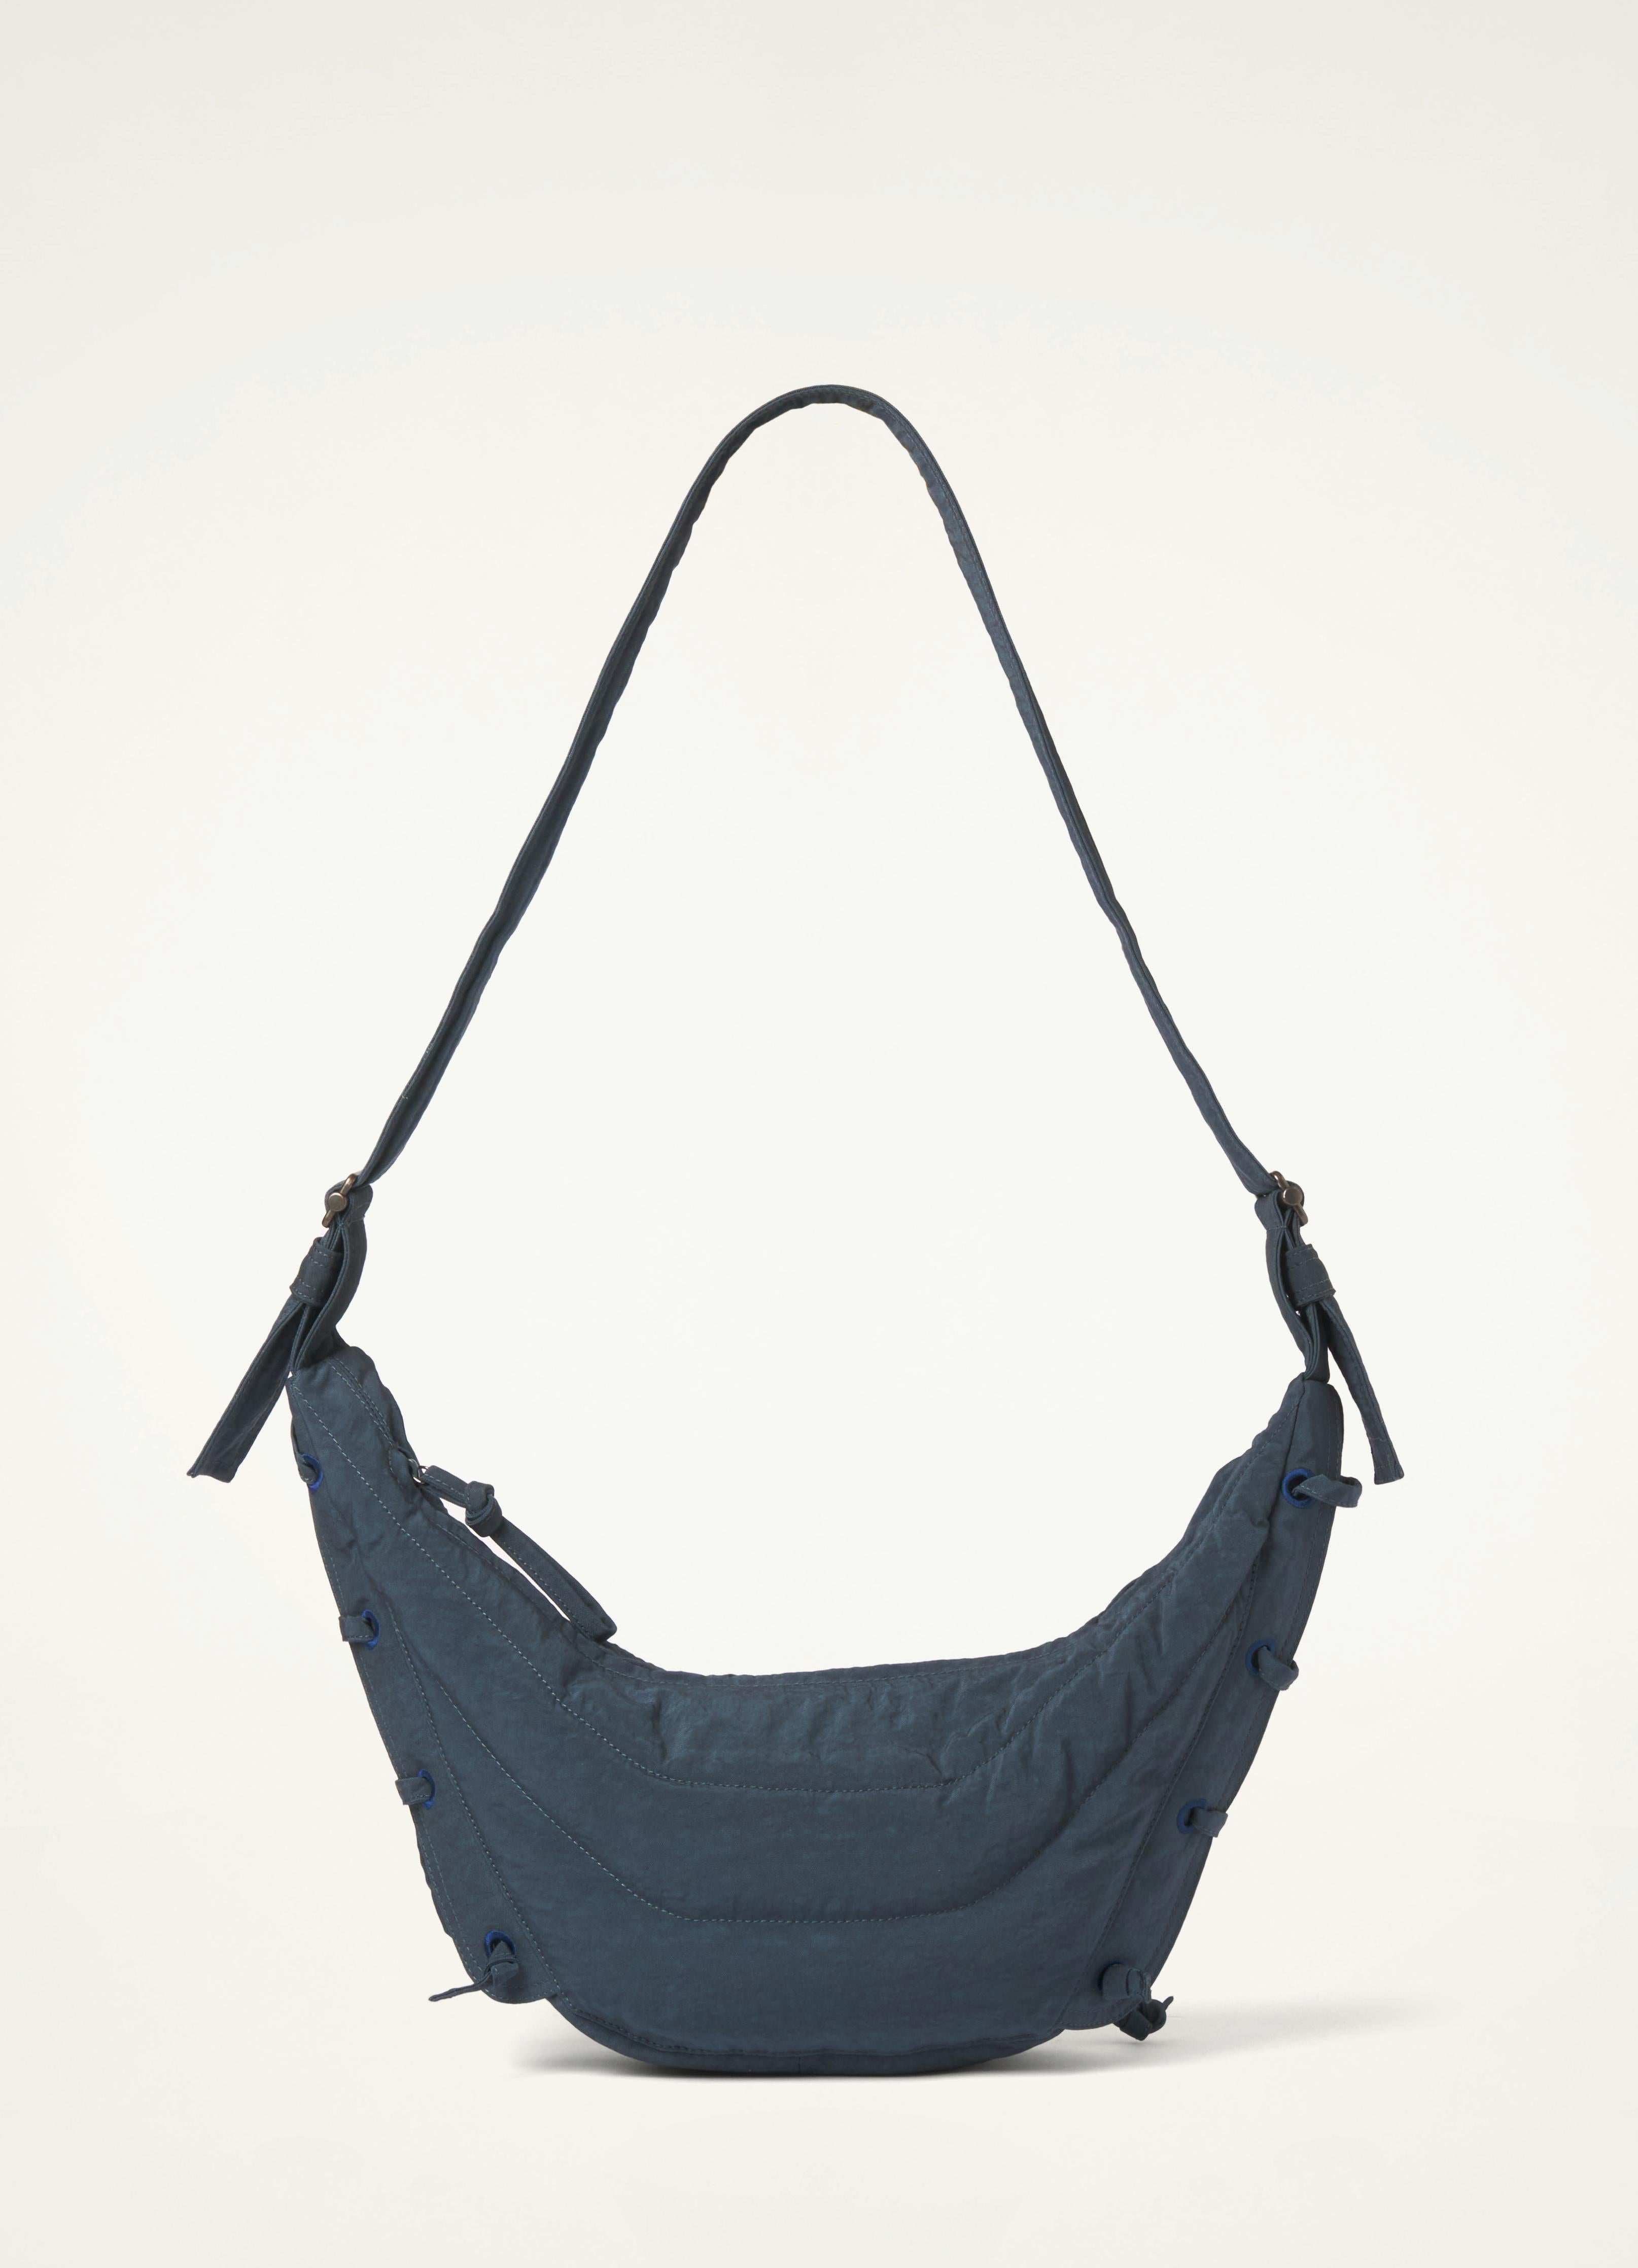 Small Soft Shoulder Bag in Green Blue Color - LEMAIRE